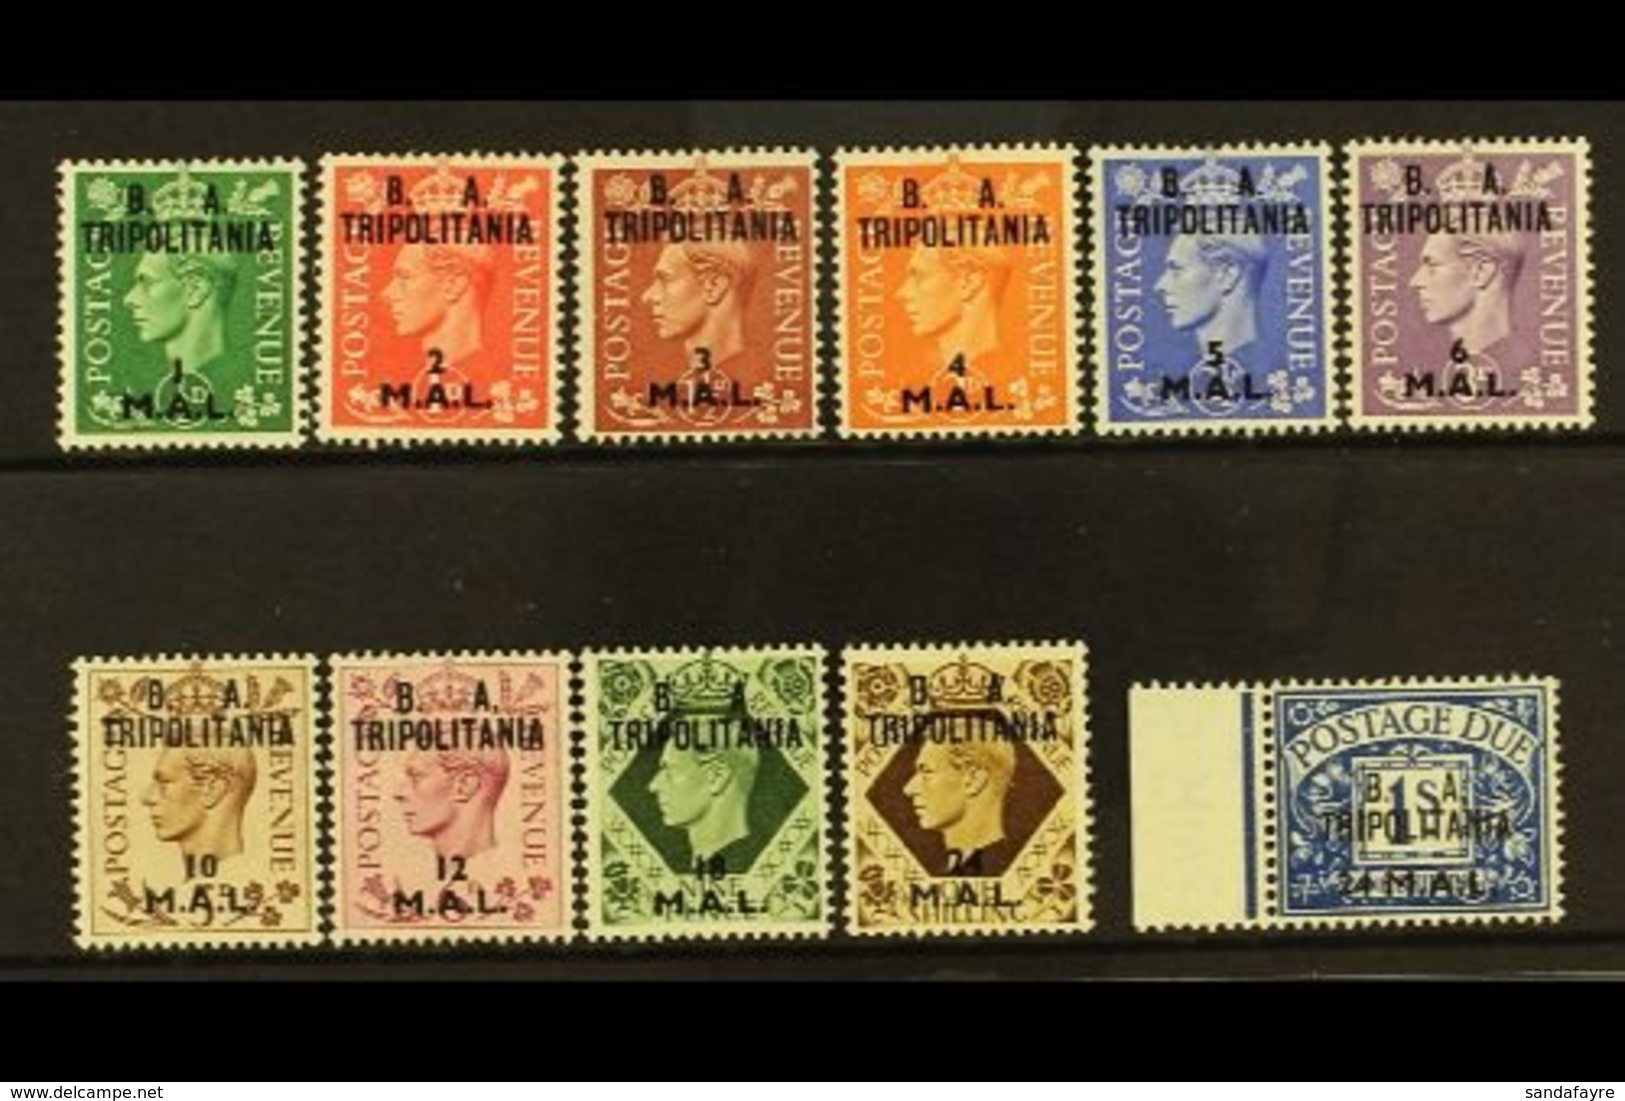 \Y TRIPOLITANIA\Y 1950 "B.A." Set To 24L On 1s (SG T14/23), Plus 24L On 1s Postage Due (SG TD10), Very Fine Mint. (11 St - Italienisch Ost-Afrika